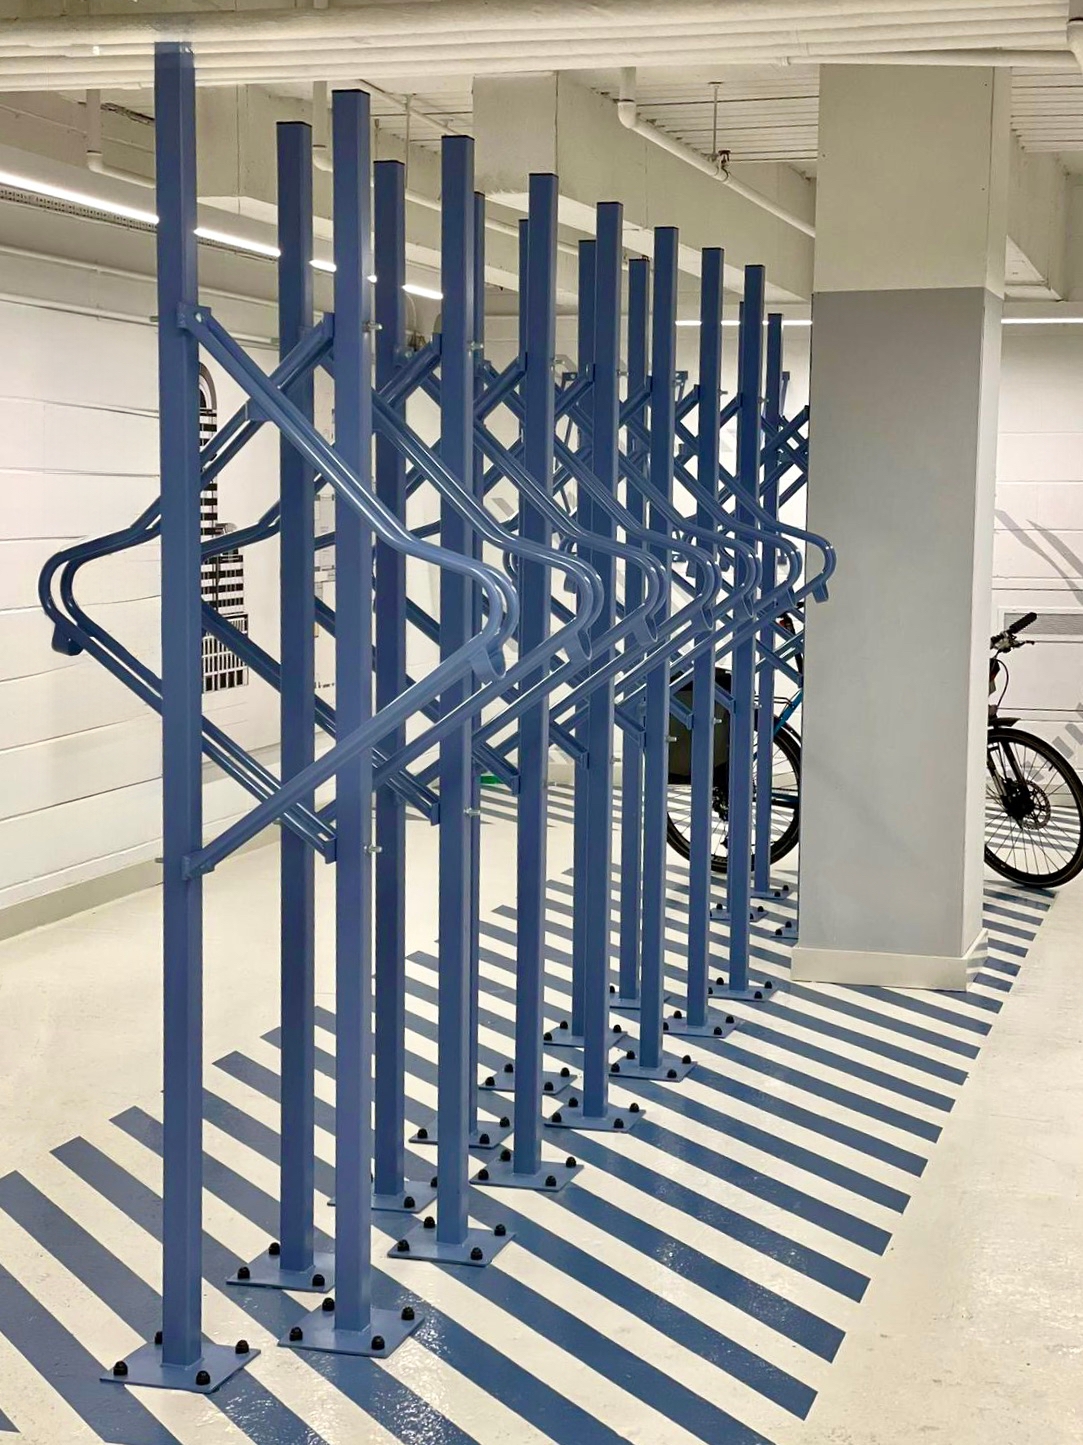 premium solo vertical bike rack in commercial building